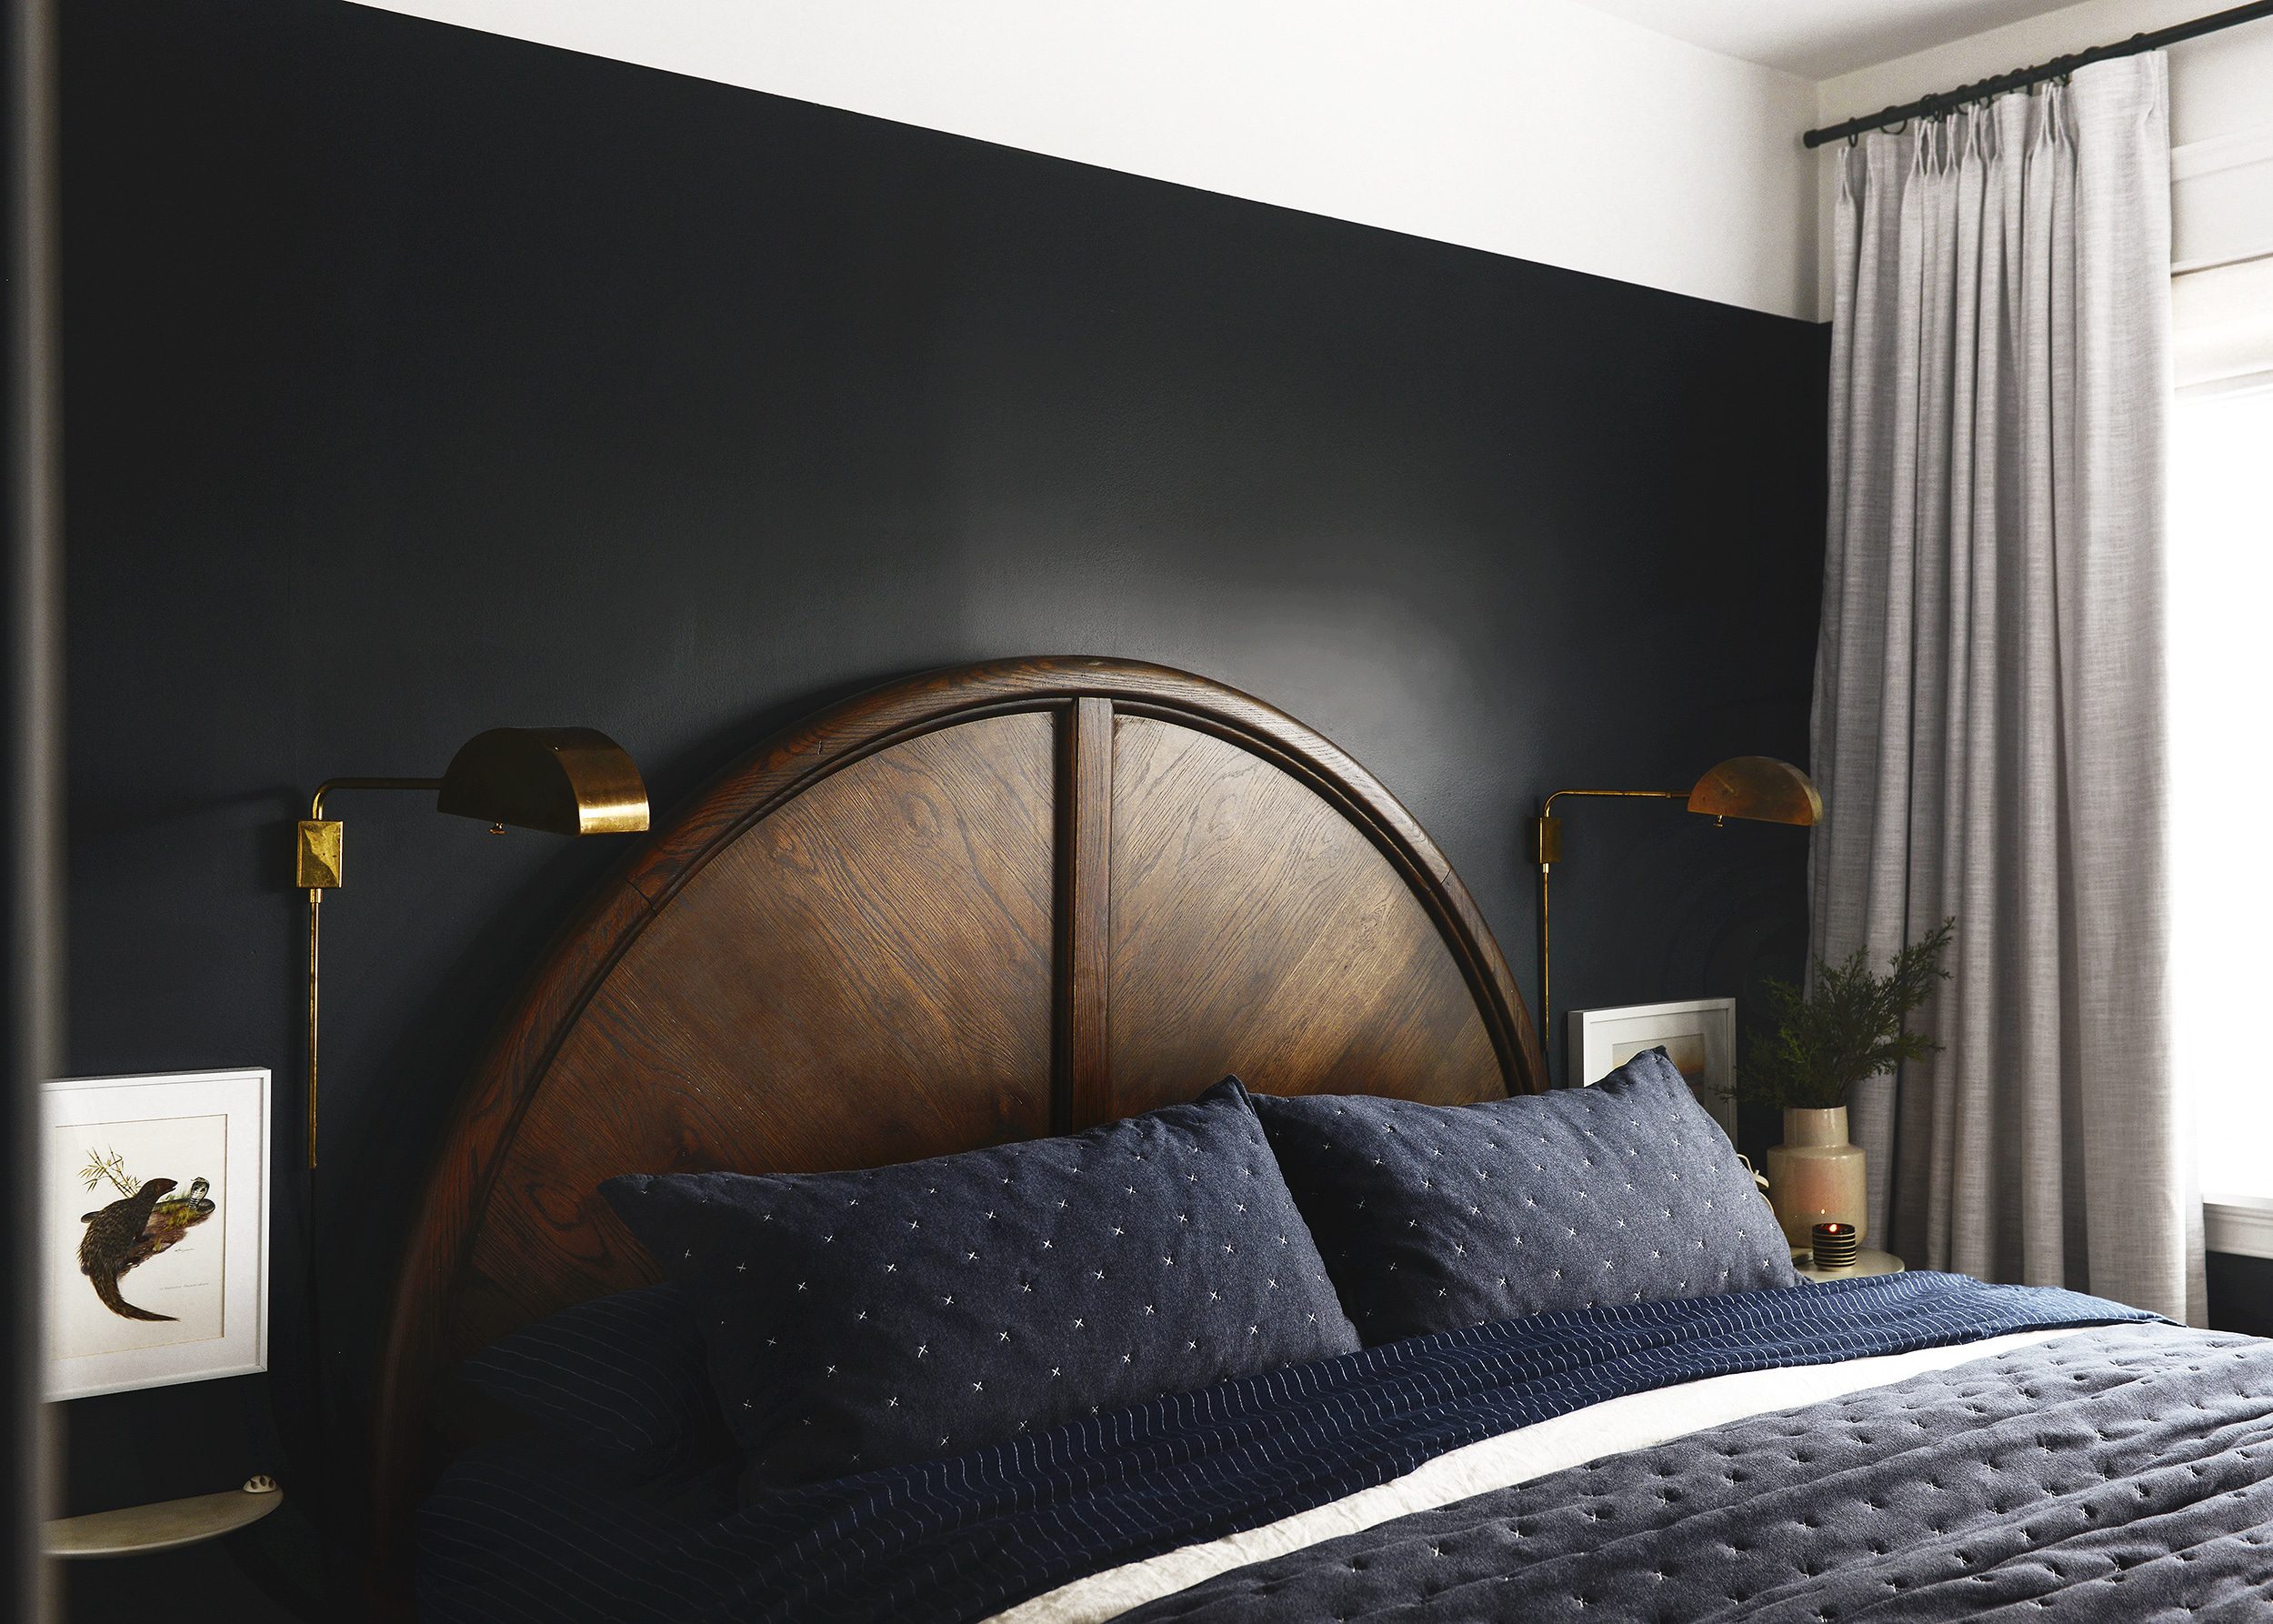 Benjamin Moore Raccoon Fur walls in a master bedroom | via Yellow Brick Home